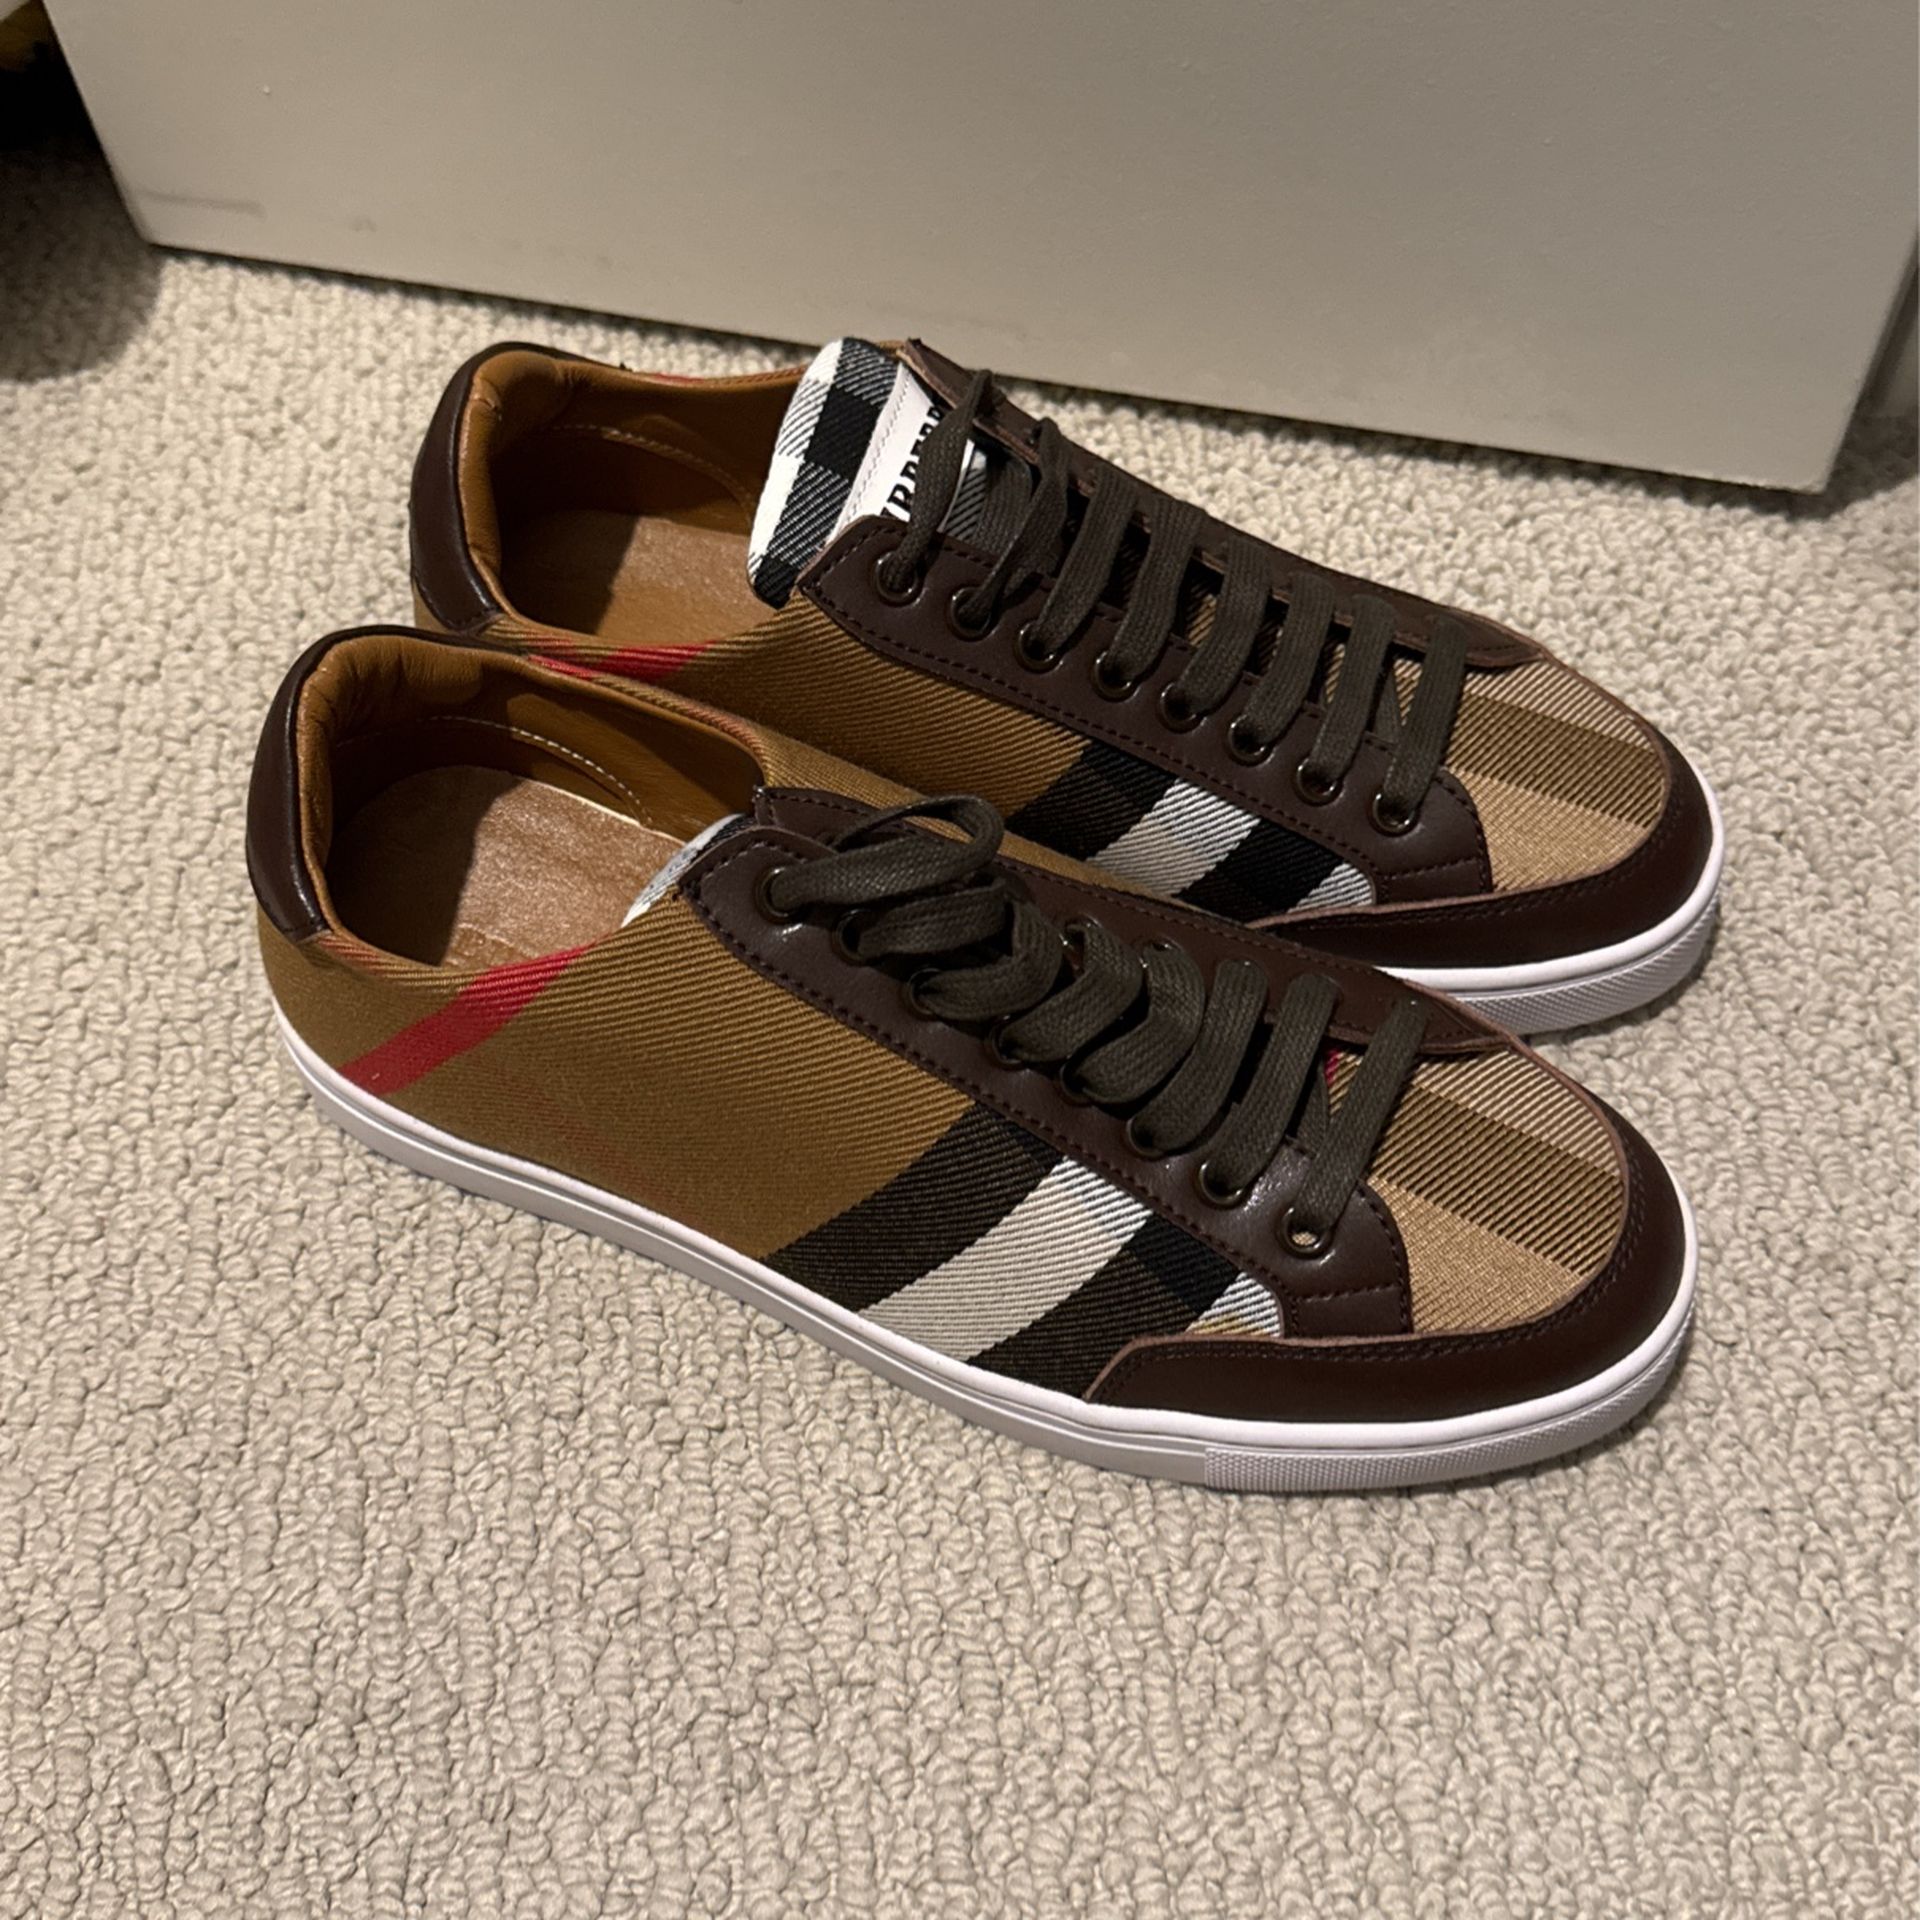 Burberry Plaid Men’s Sneakers - Size 10